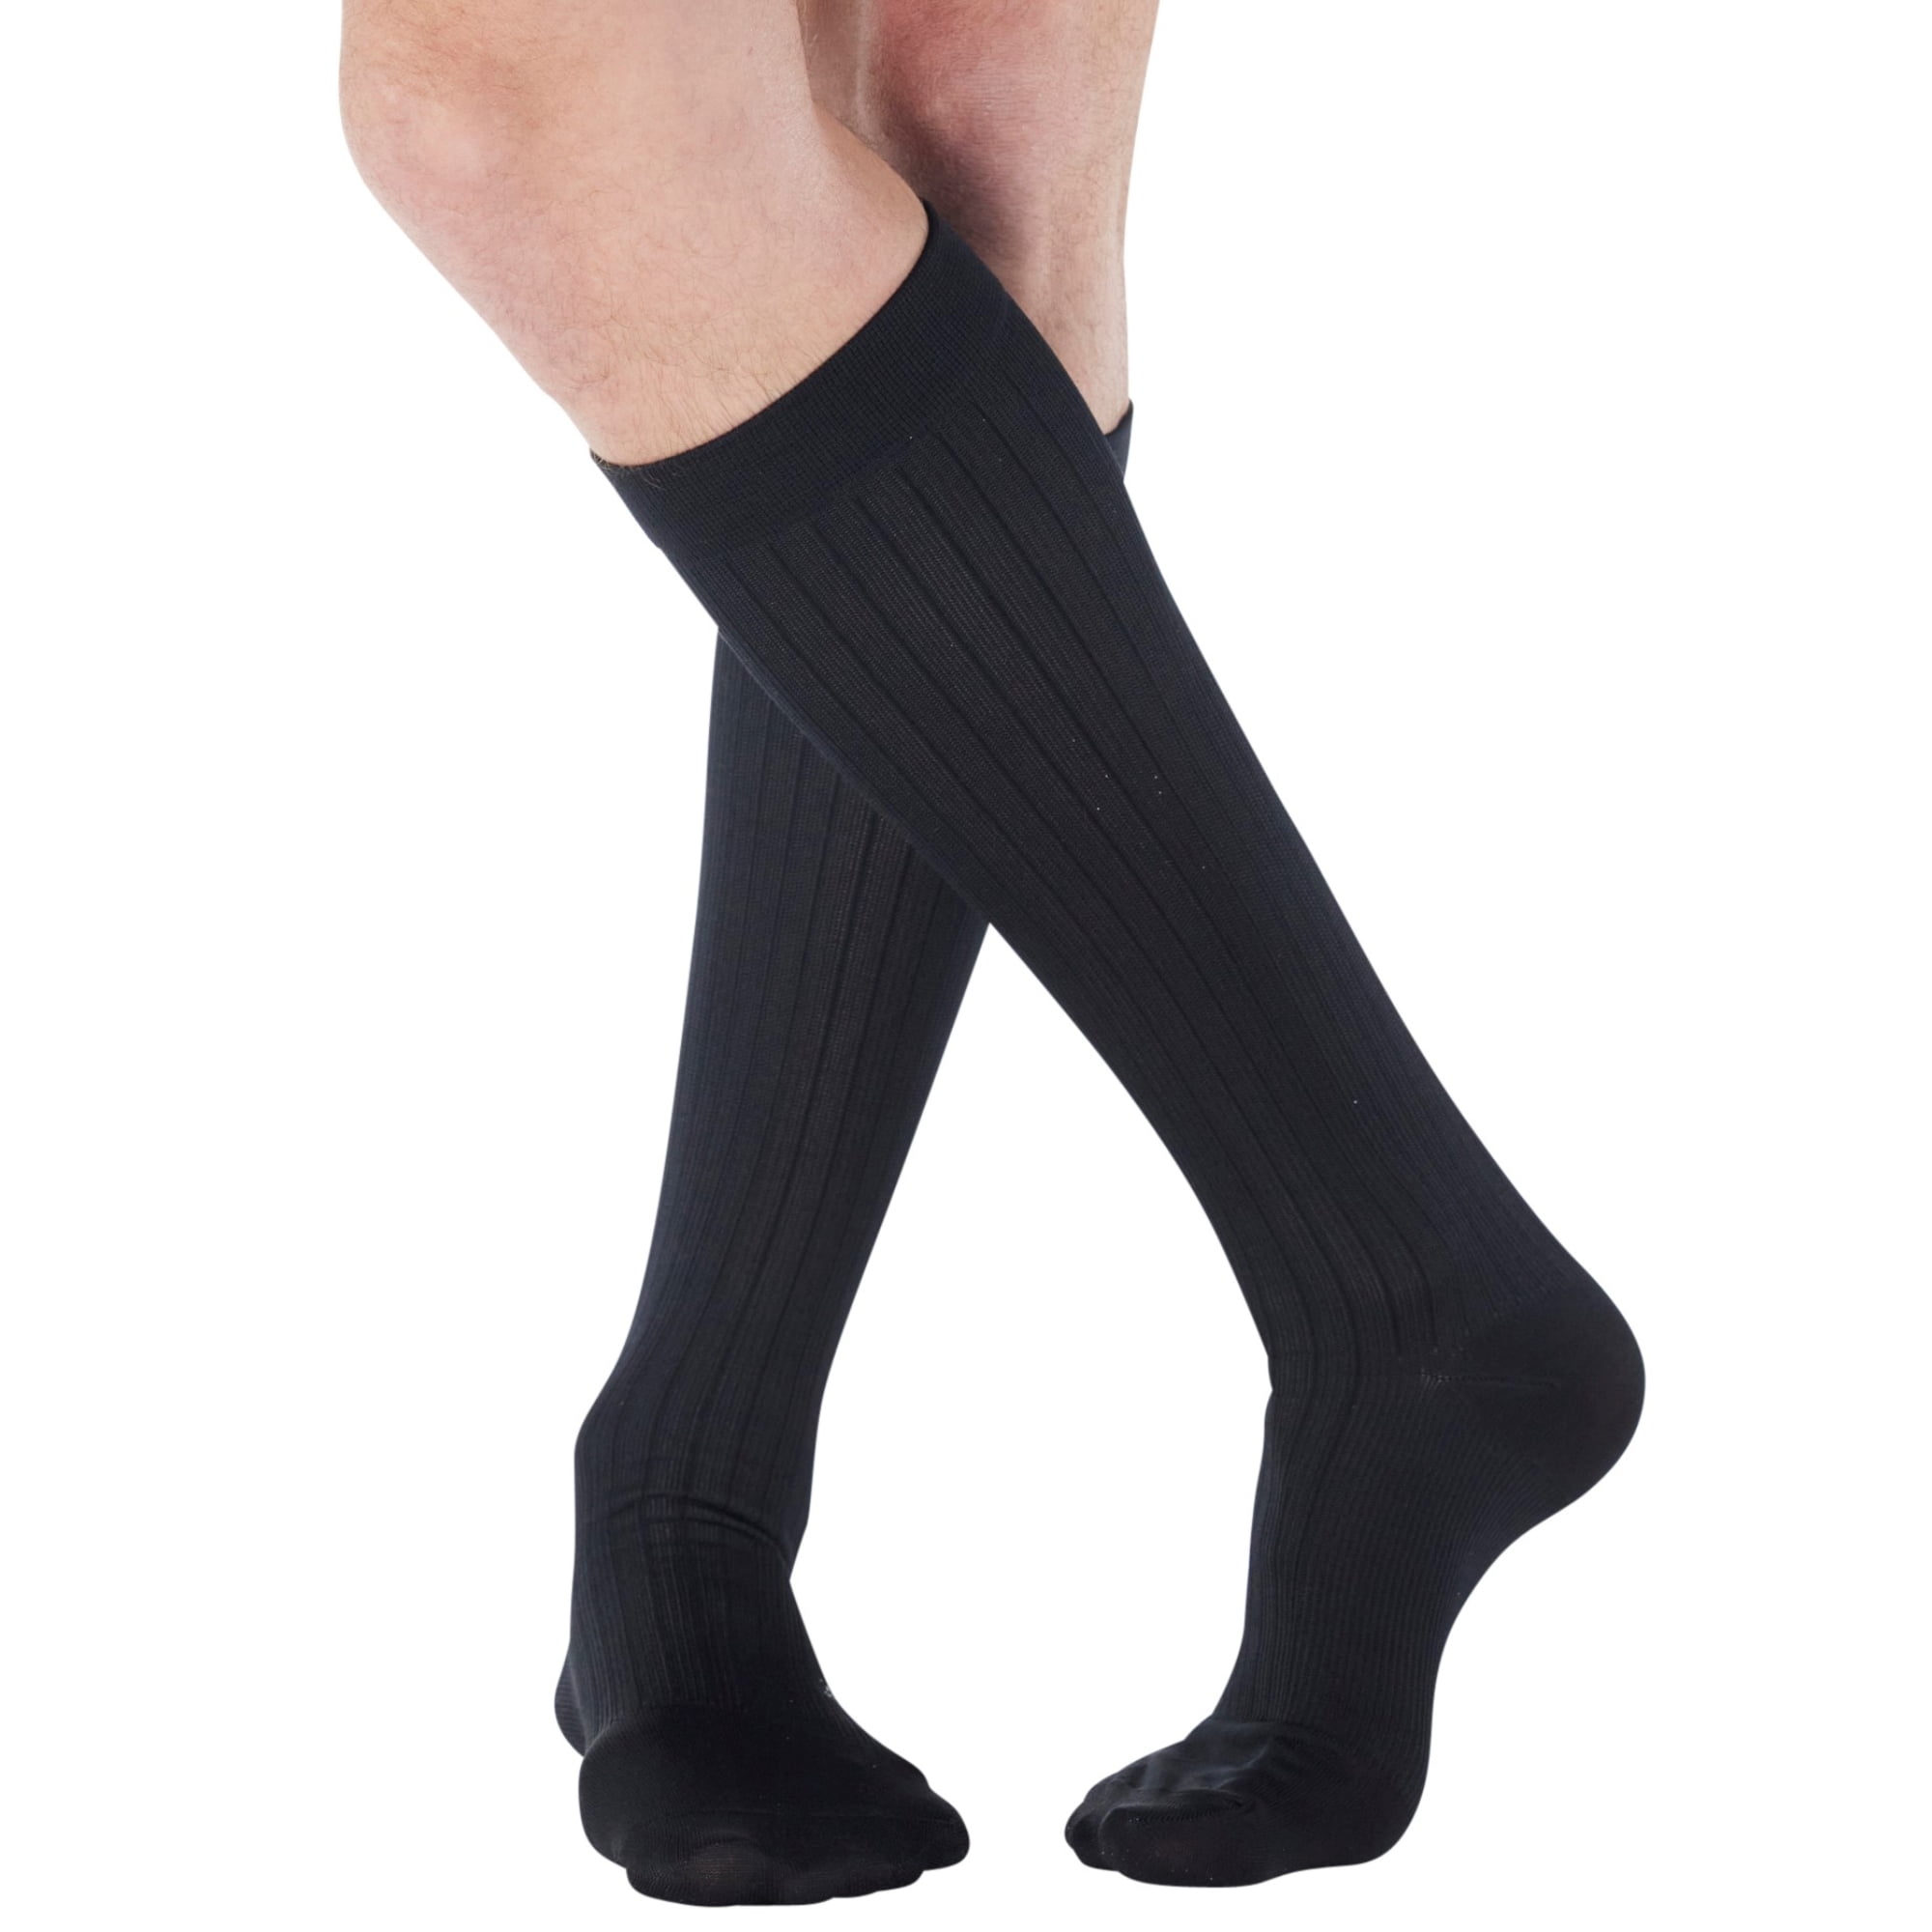 Flight Socks Comfy Compression Socks Vein Stockings Travel Knee High UK 